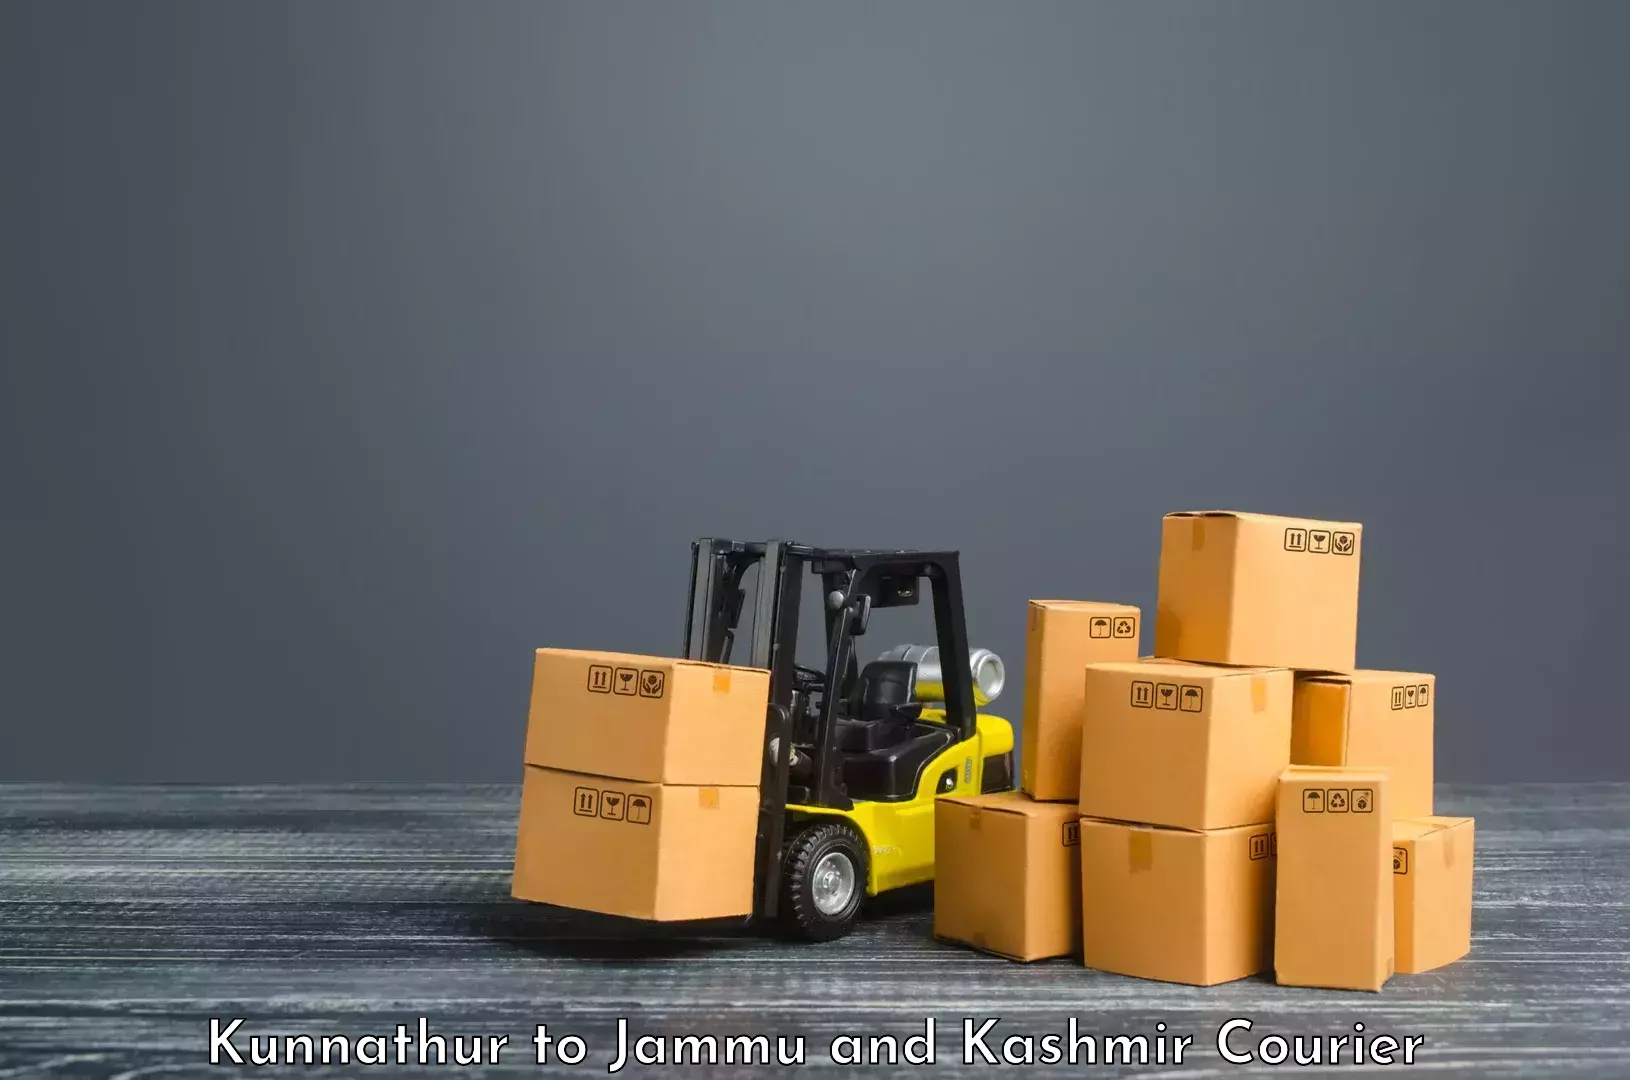 Same-day delivery solutions Kunnathur to Srinagar Kashmir